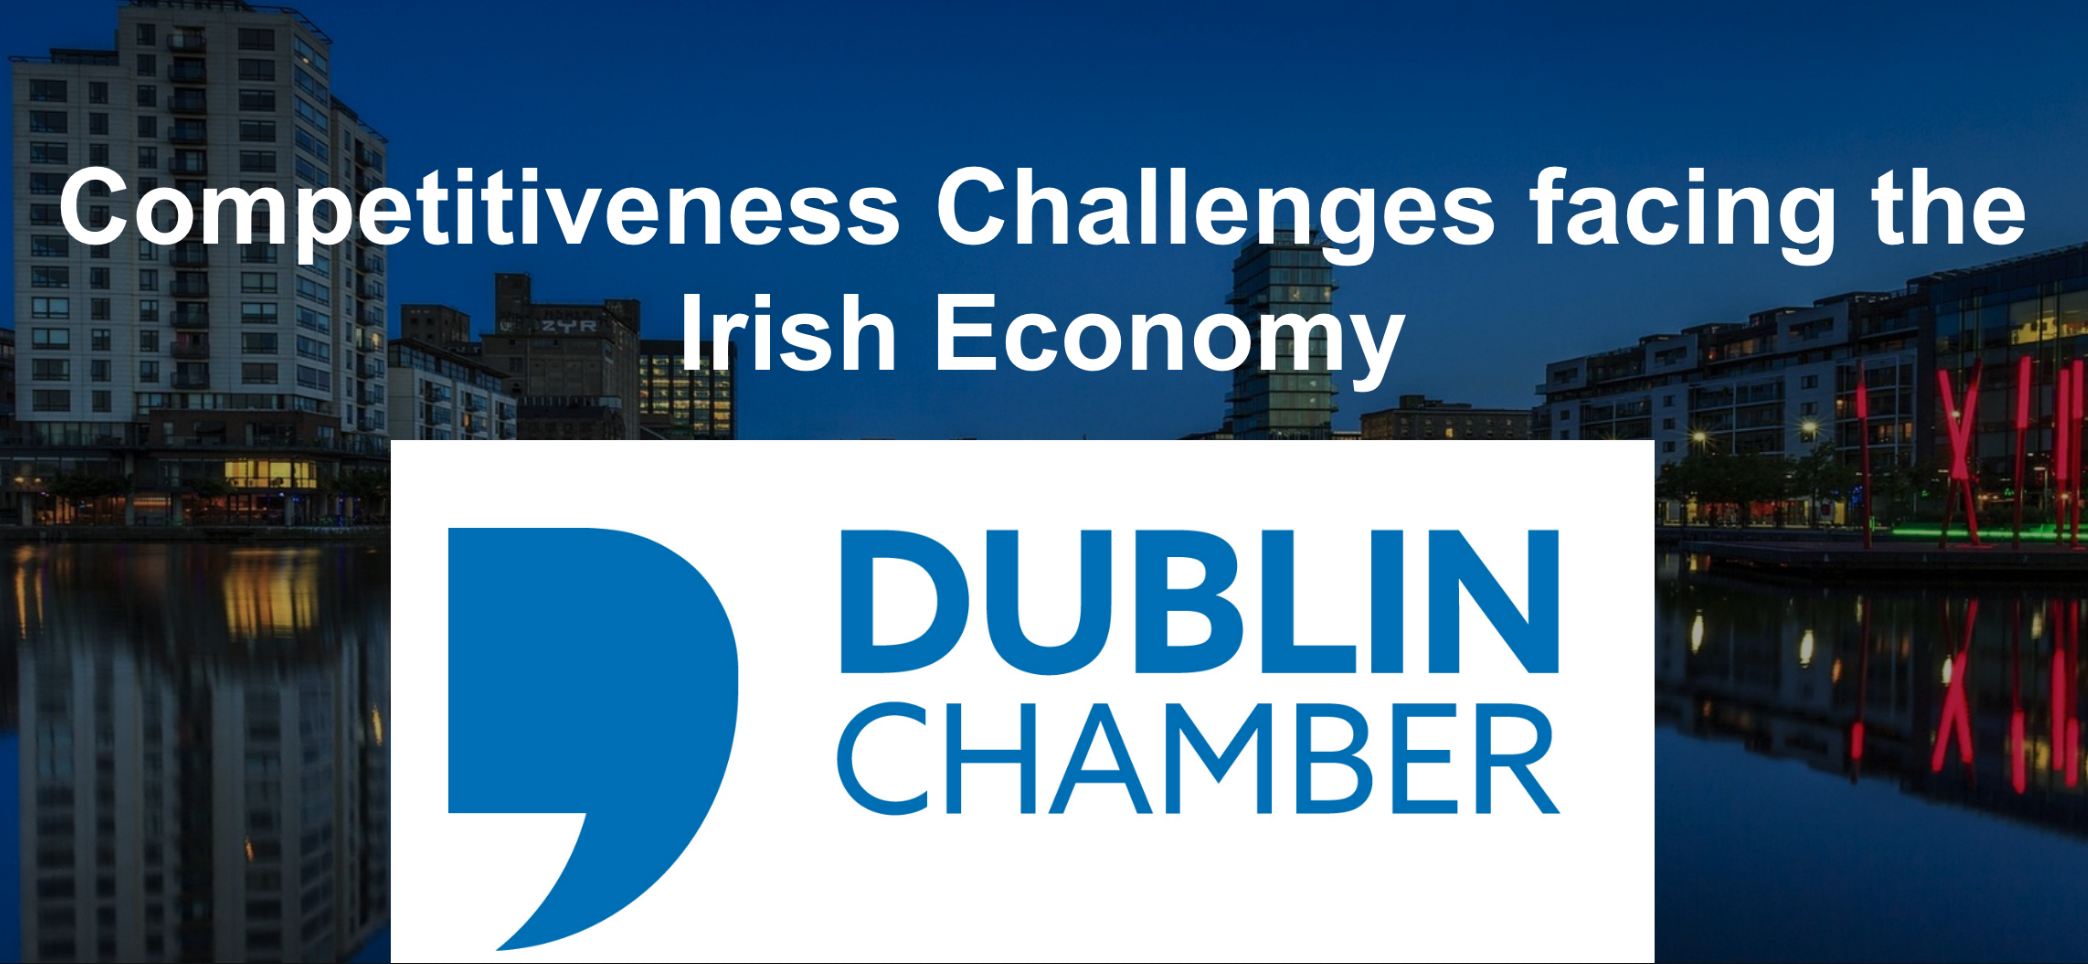 Competitiveness Challenges facing the Irish Economy - Dublin Chamber